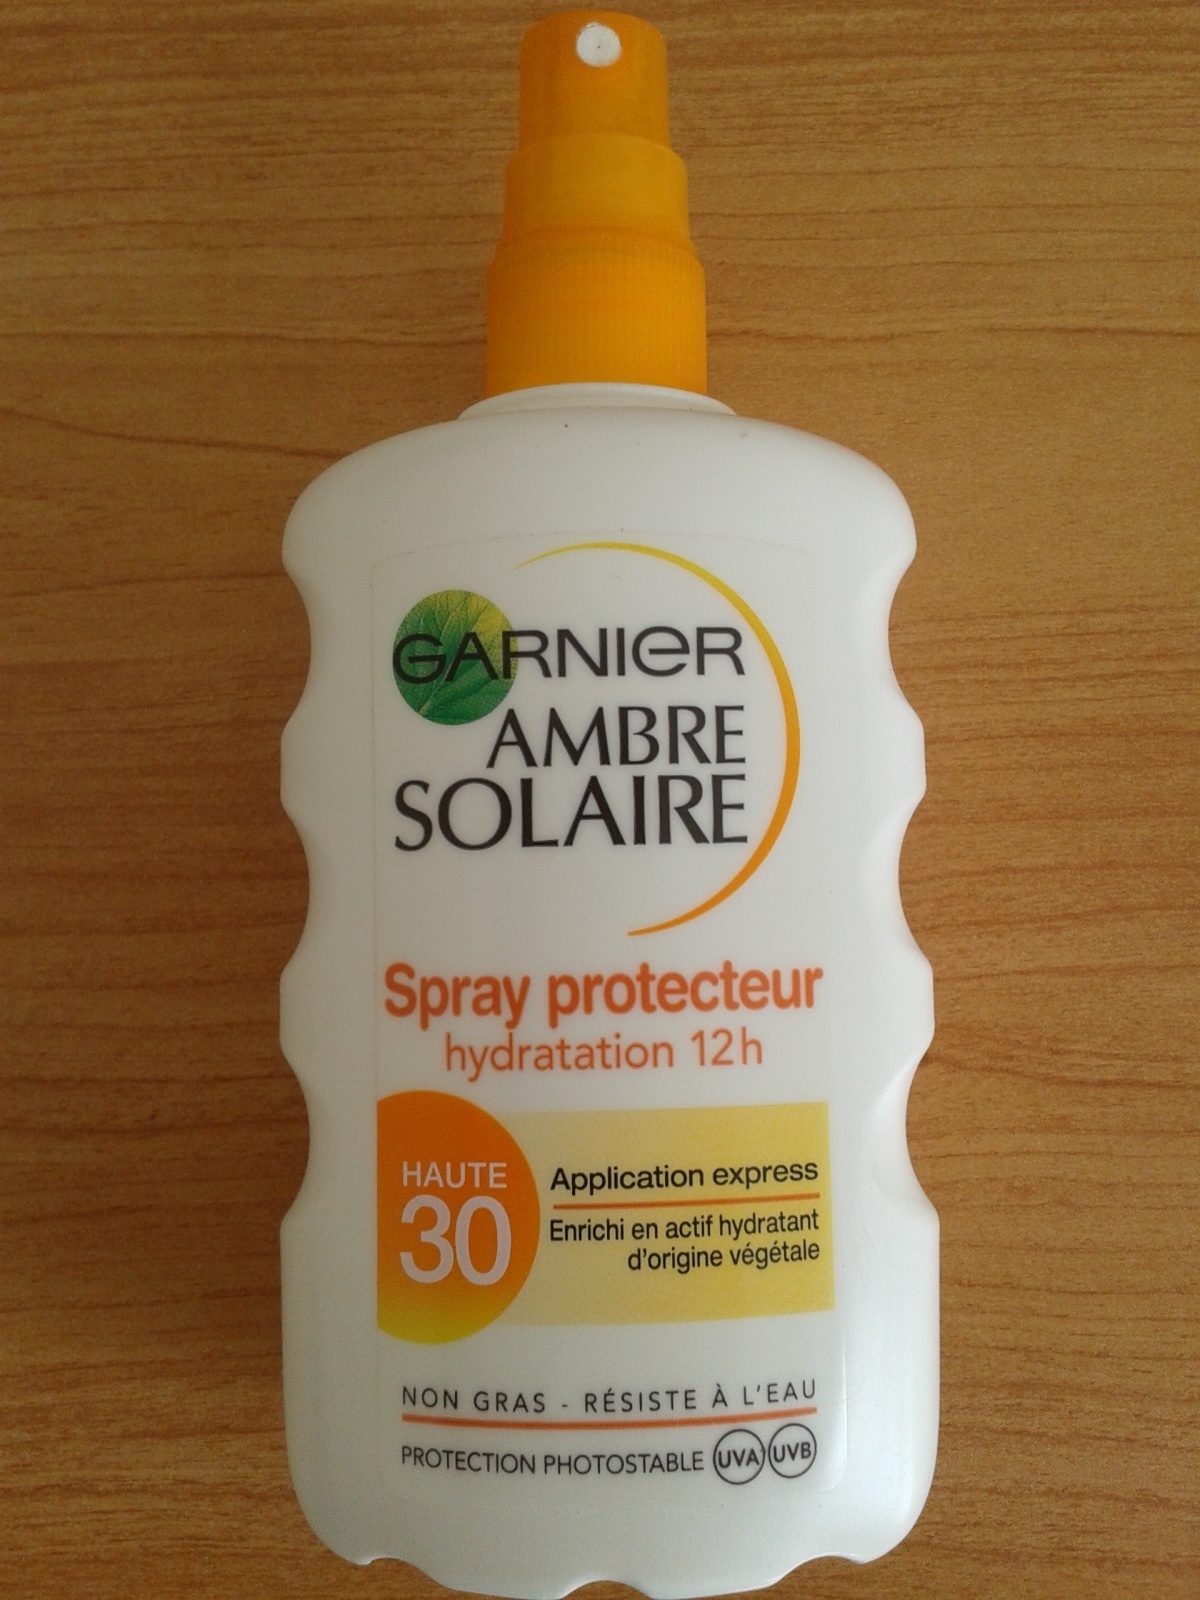 Ambre solaire Spray Protecteur hydratation 12H - Product - fr